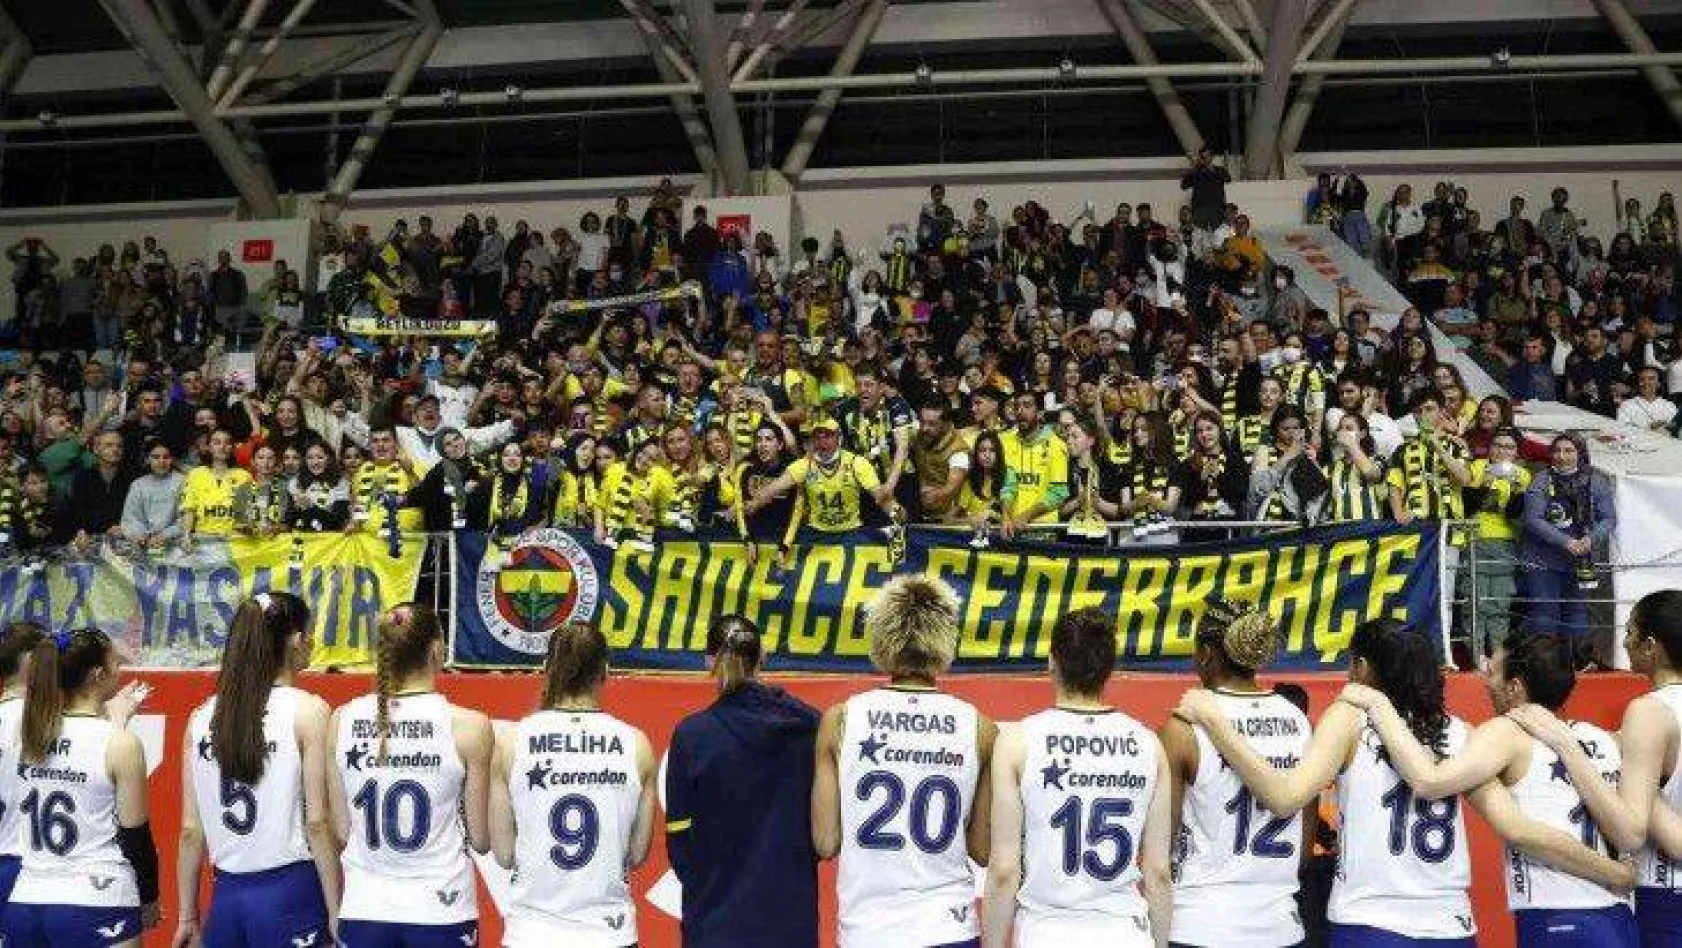 Fenerbahçe Opet, seride 1-0 öne geçti